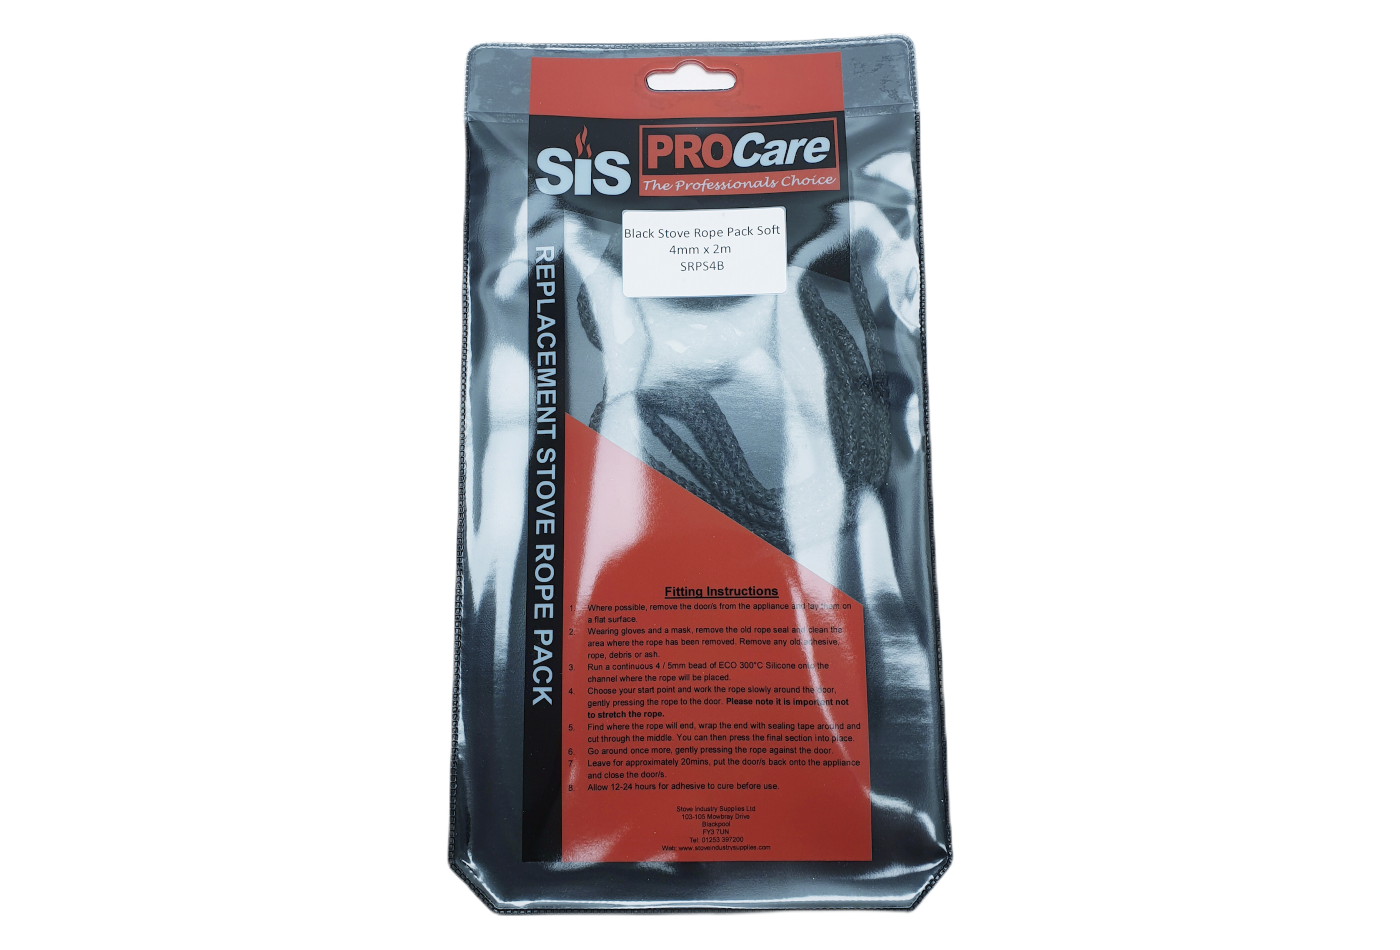 SiS Procare Black 4 milimetre x 2 metre Black Soft Stove Rope Pack - product code SRPS4B